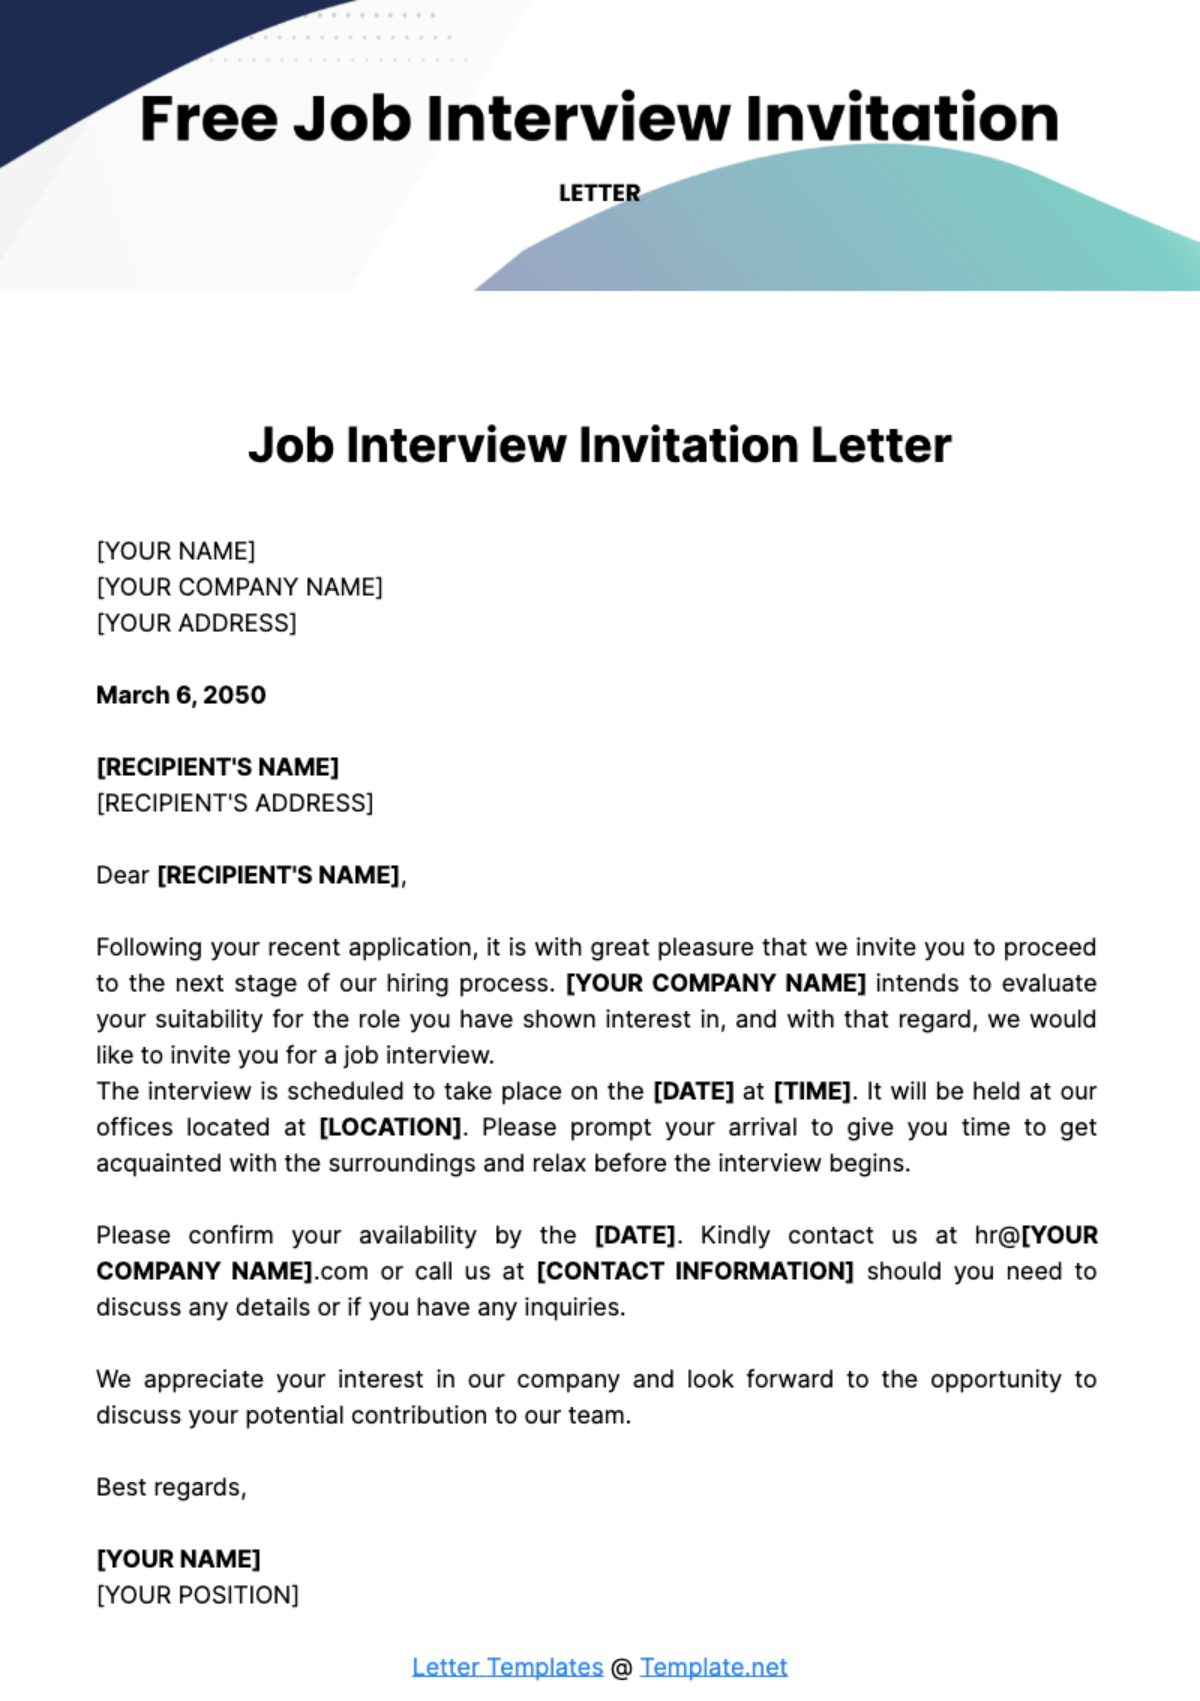 Free Job Interview Invitation Letter Template